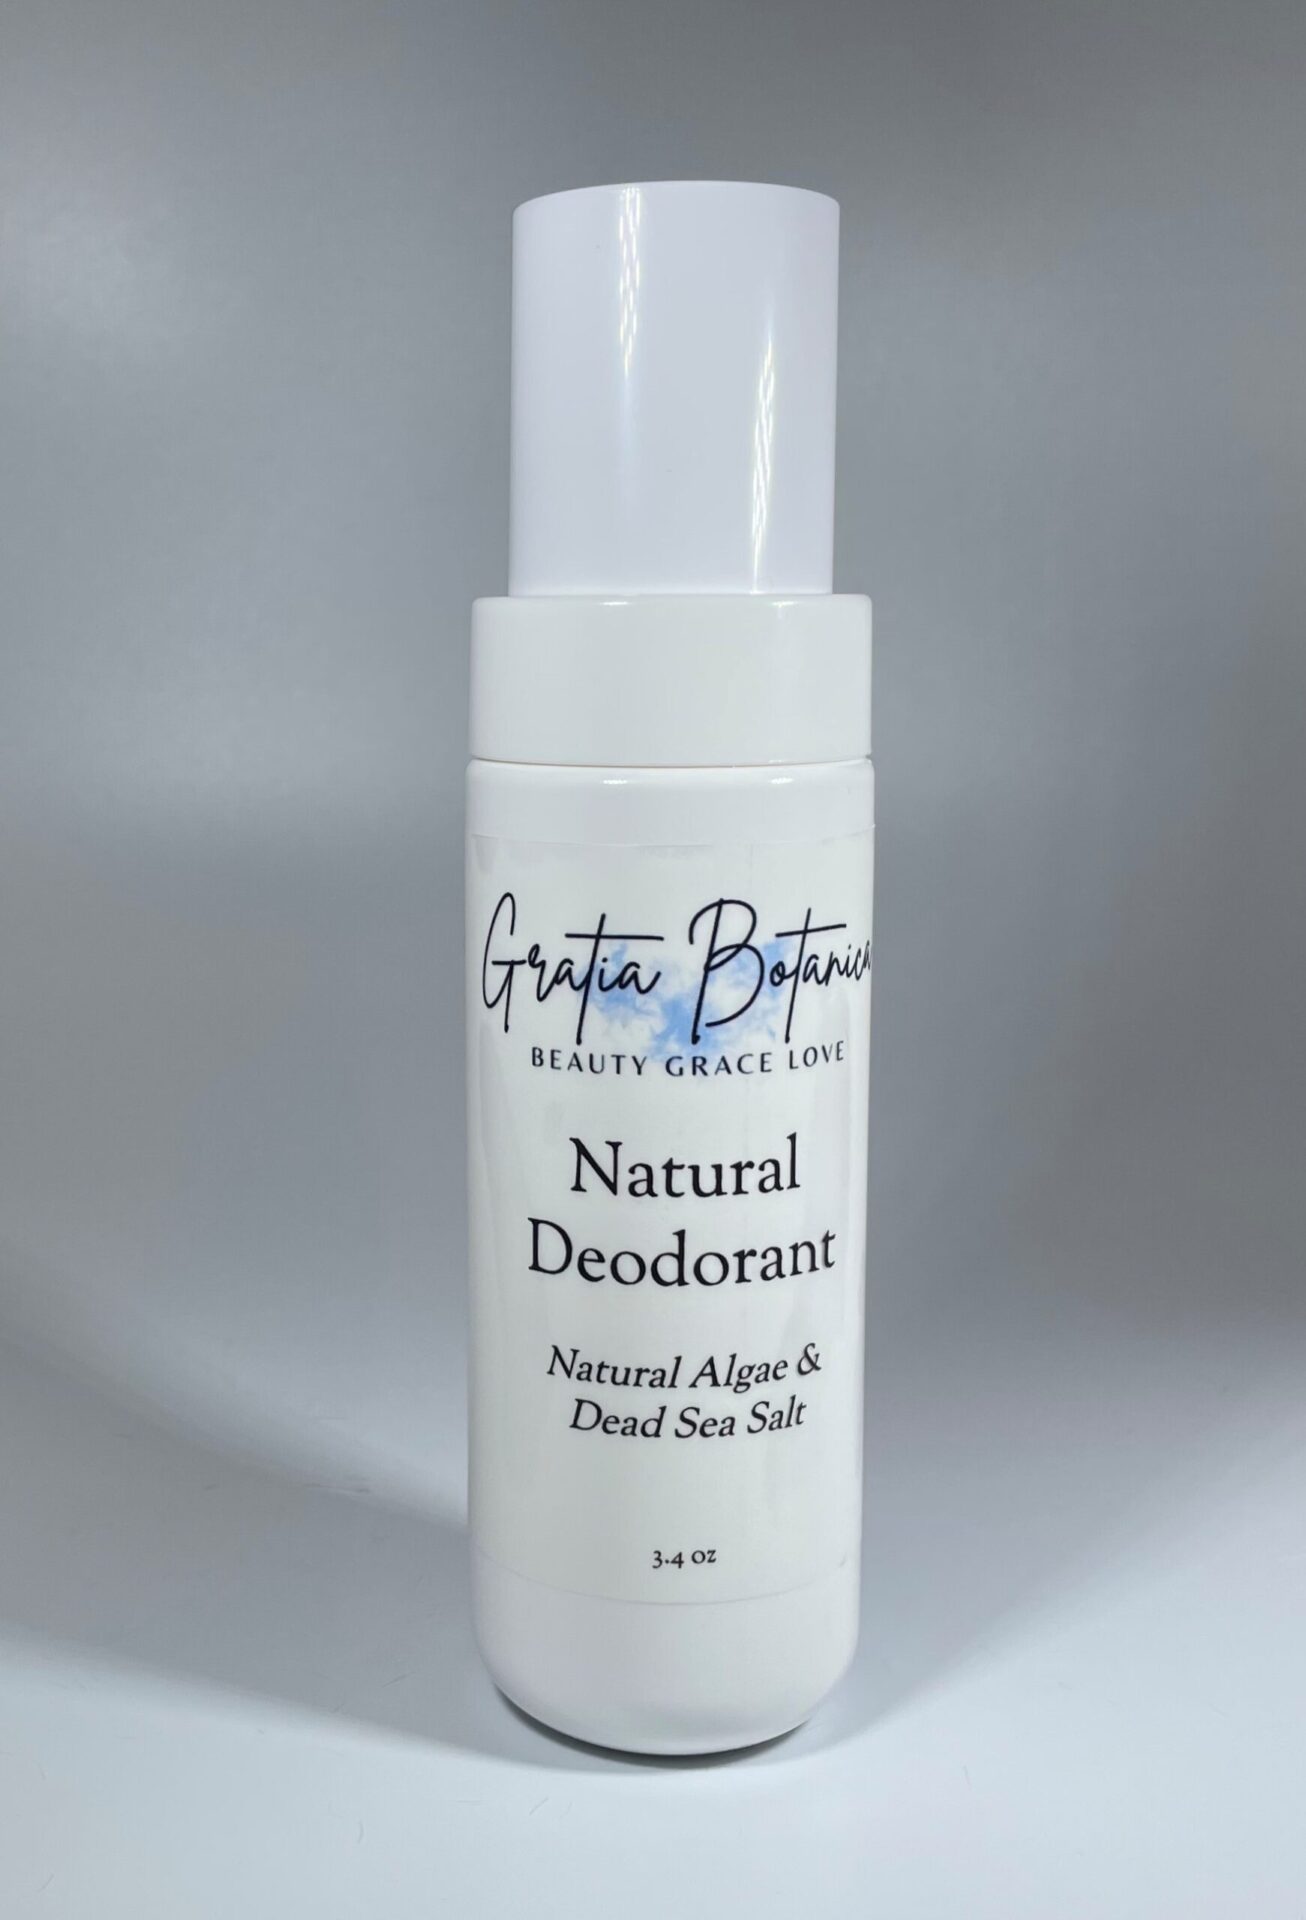 Natural Deodorant Spray